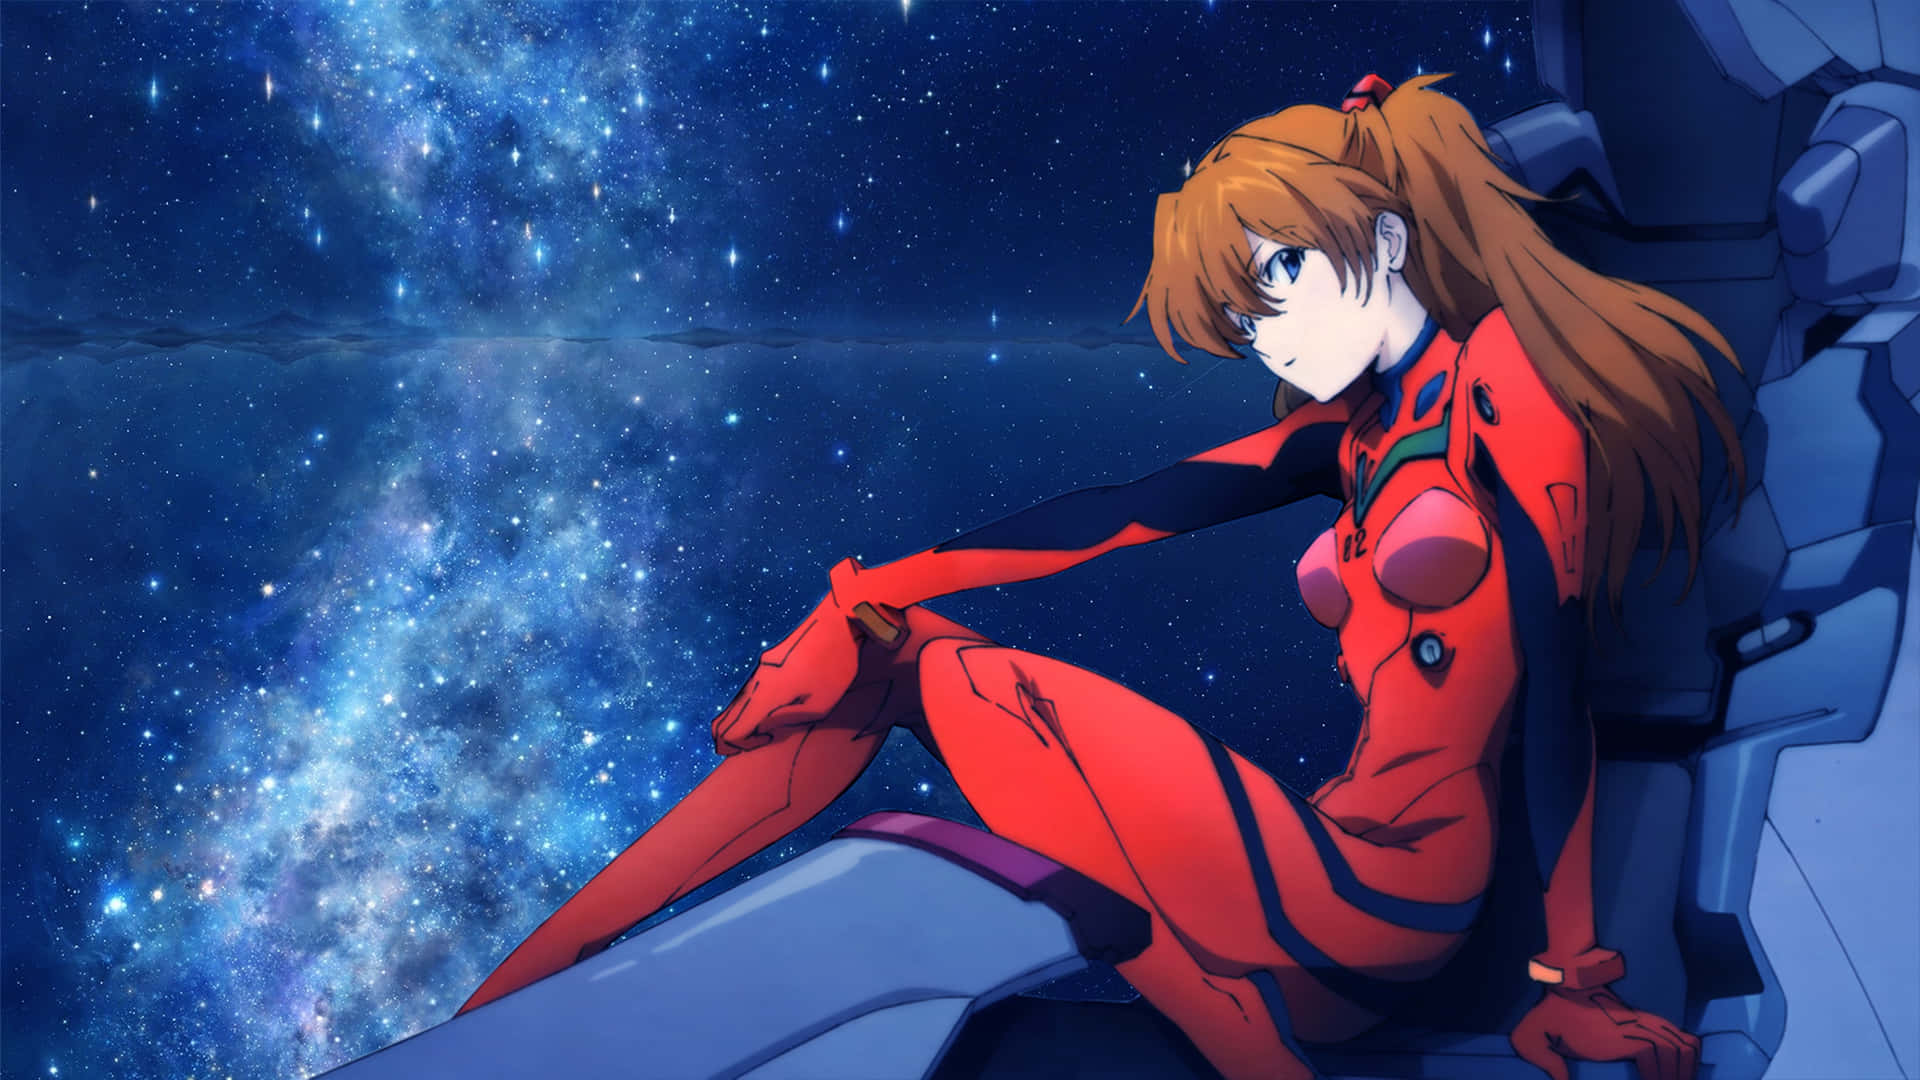 Shinji Ikari and the Evangelion Unit 01